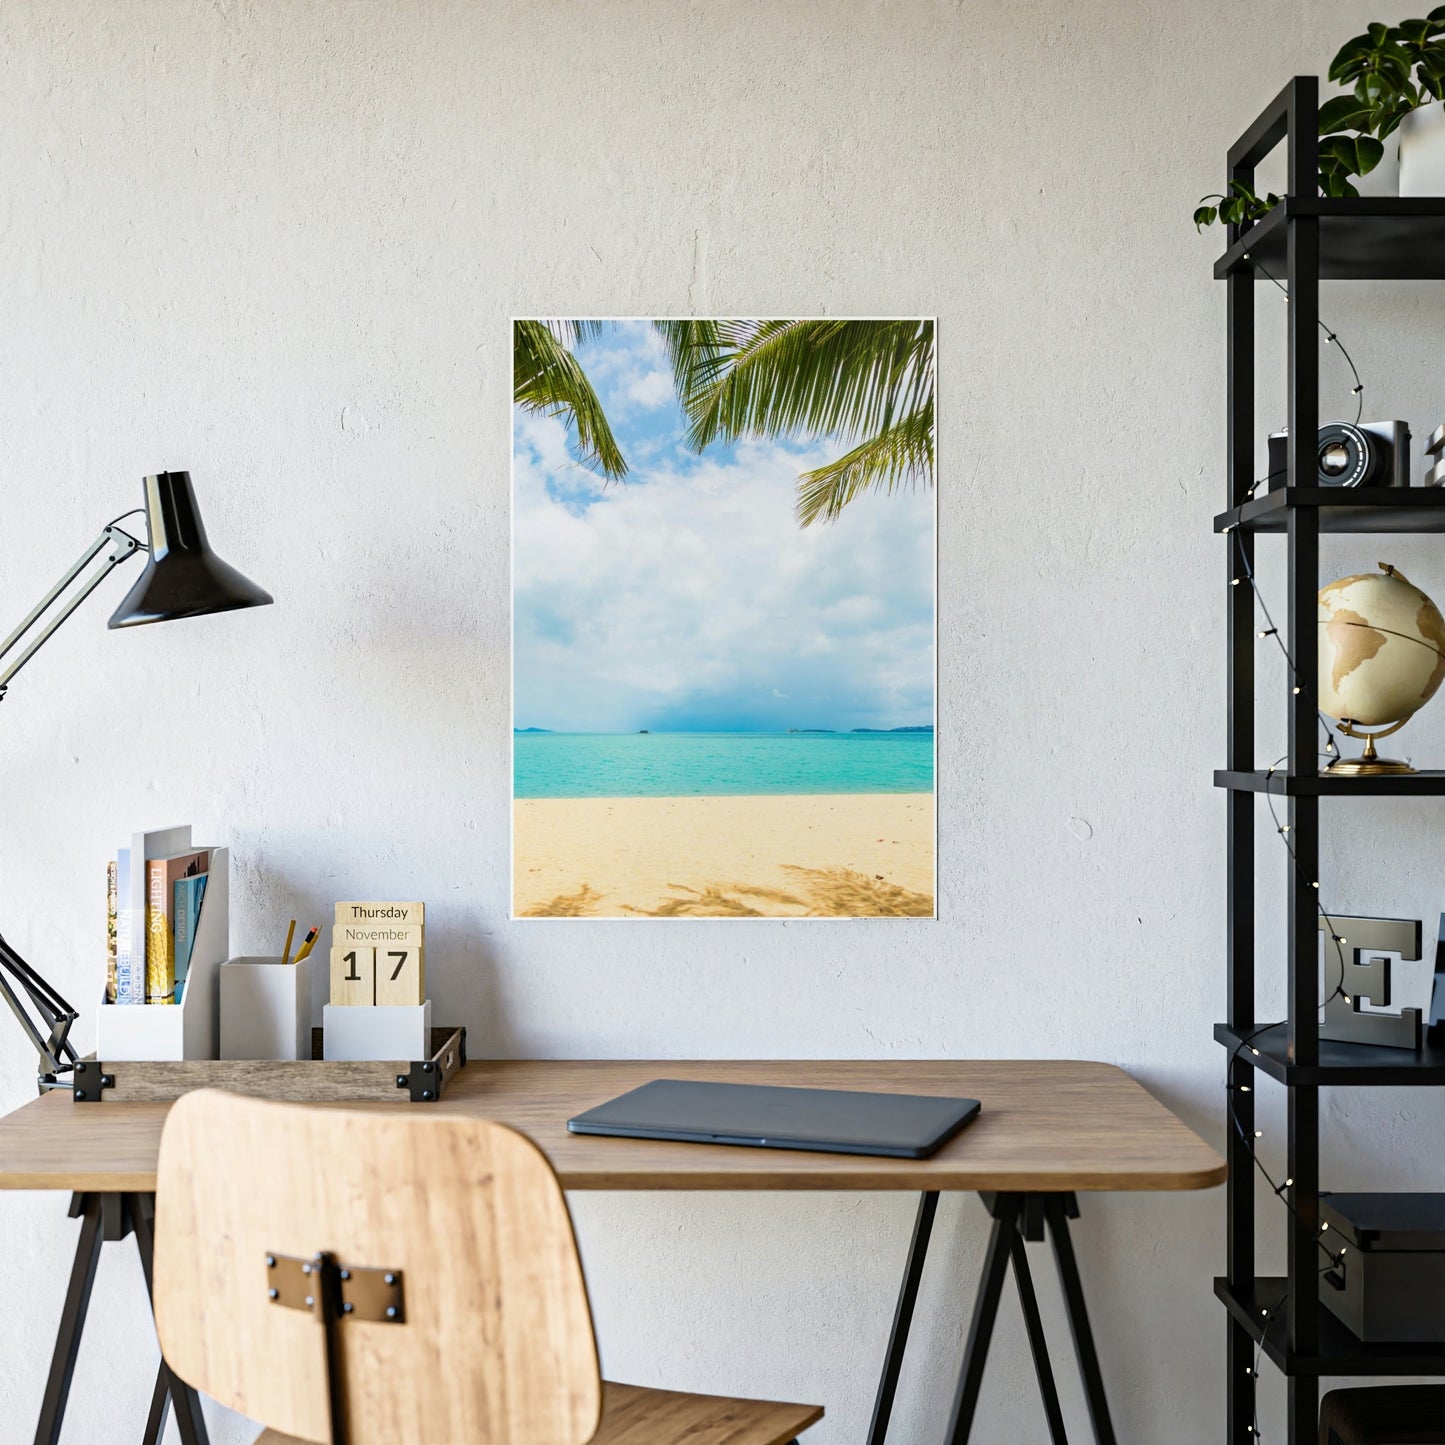 Seashore Sanctuary: Art Print of a Tranquil Island Beach Scene on a Framed Canvas